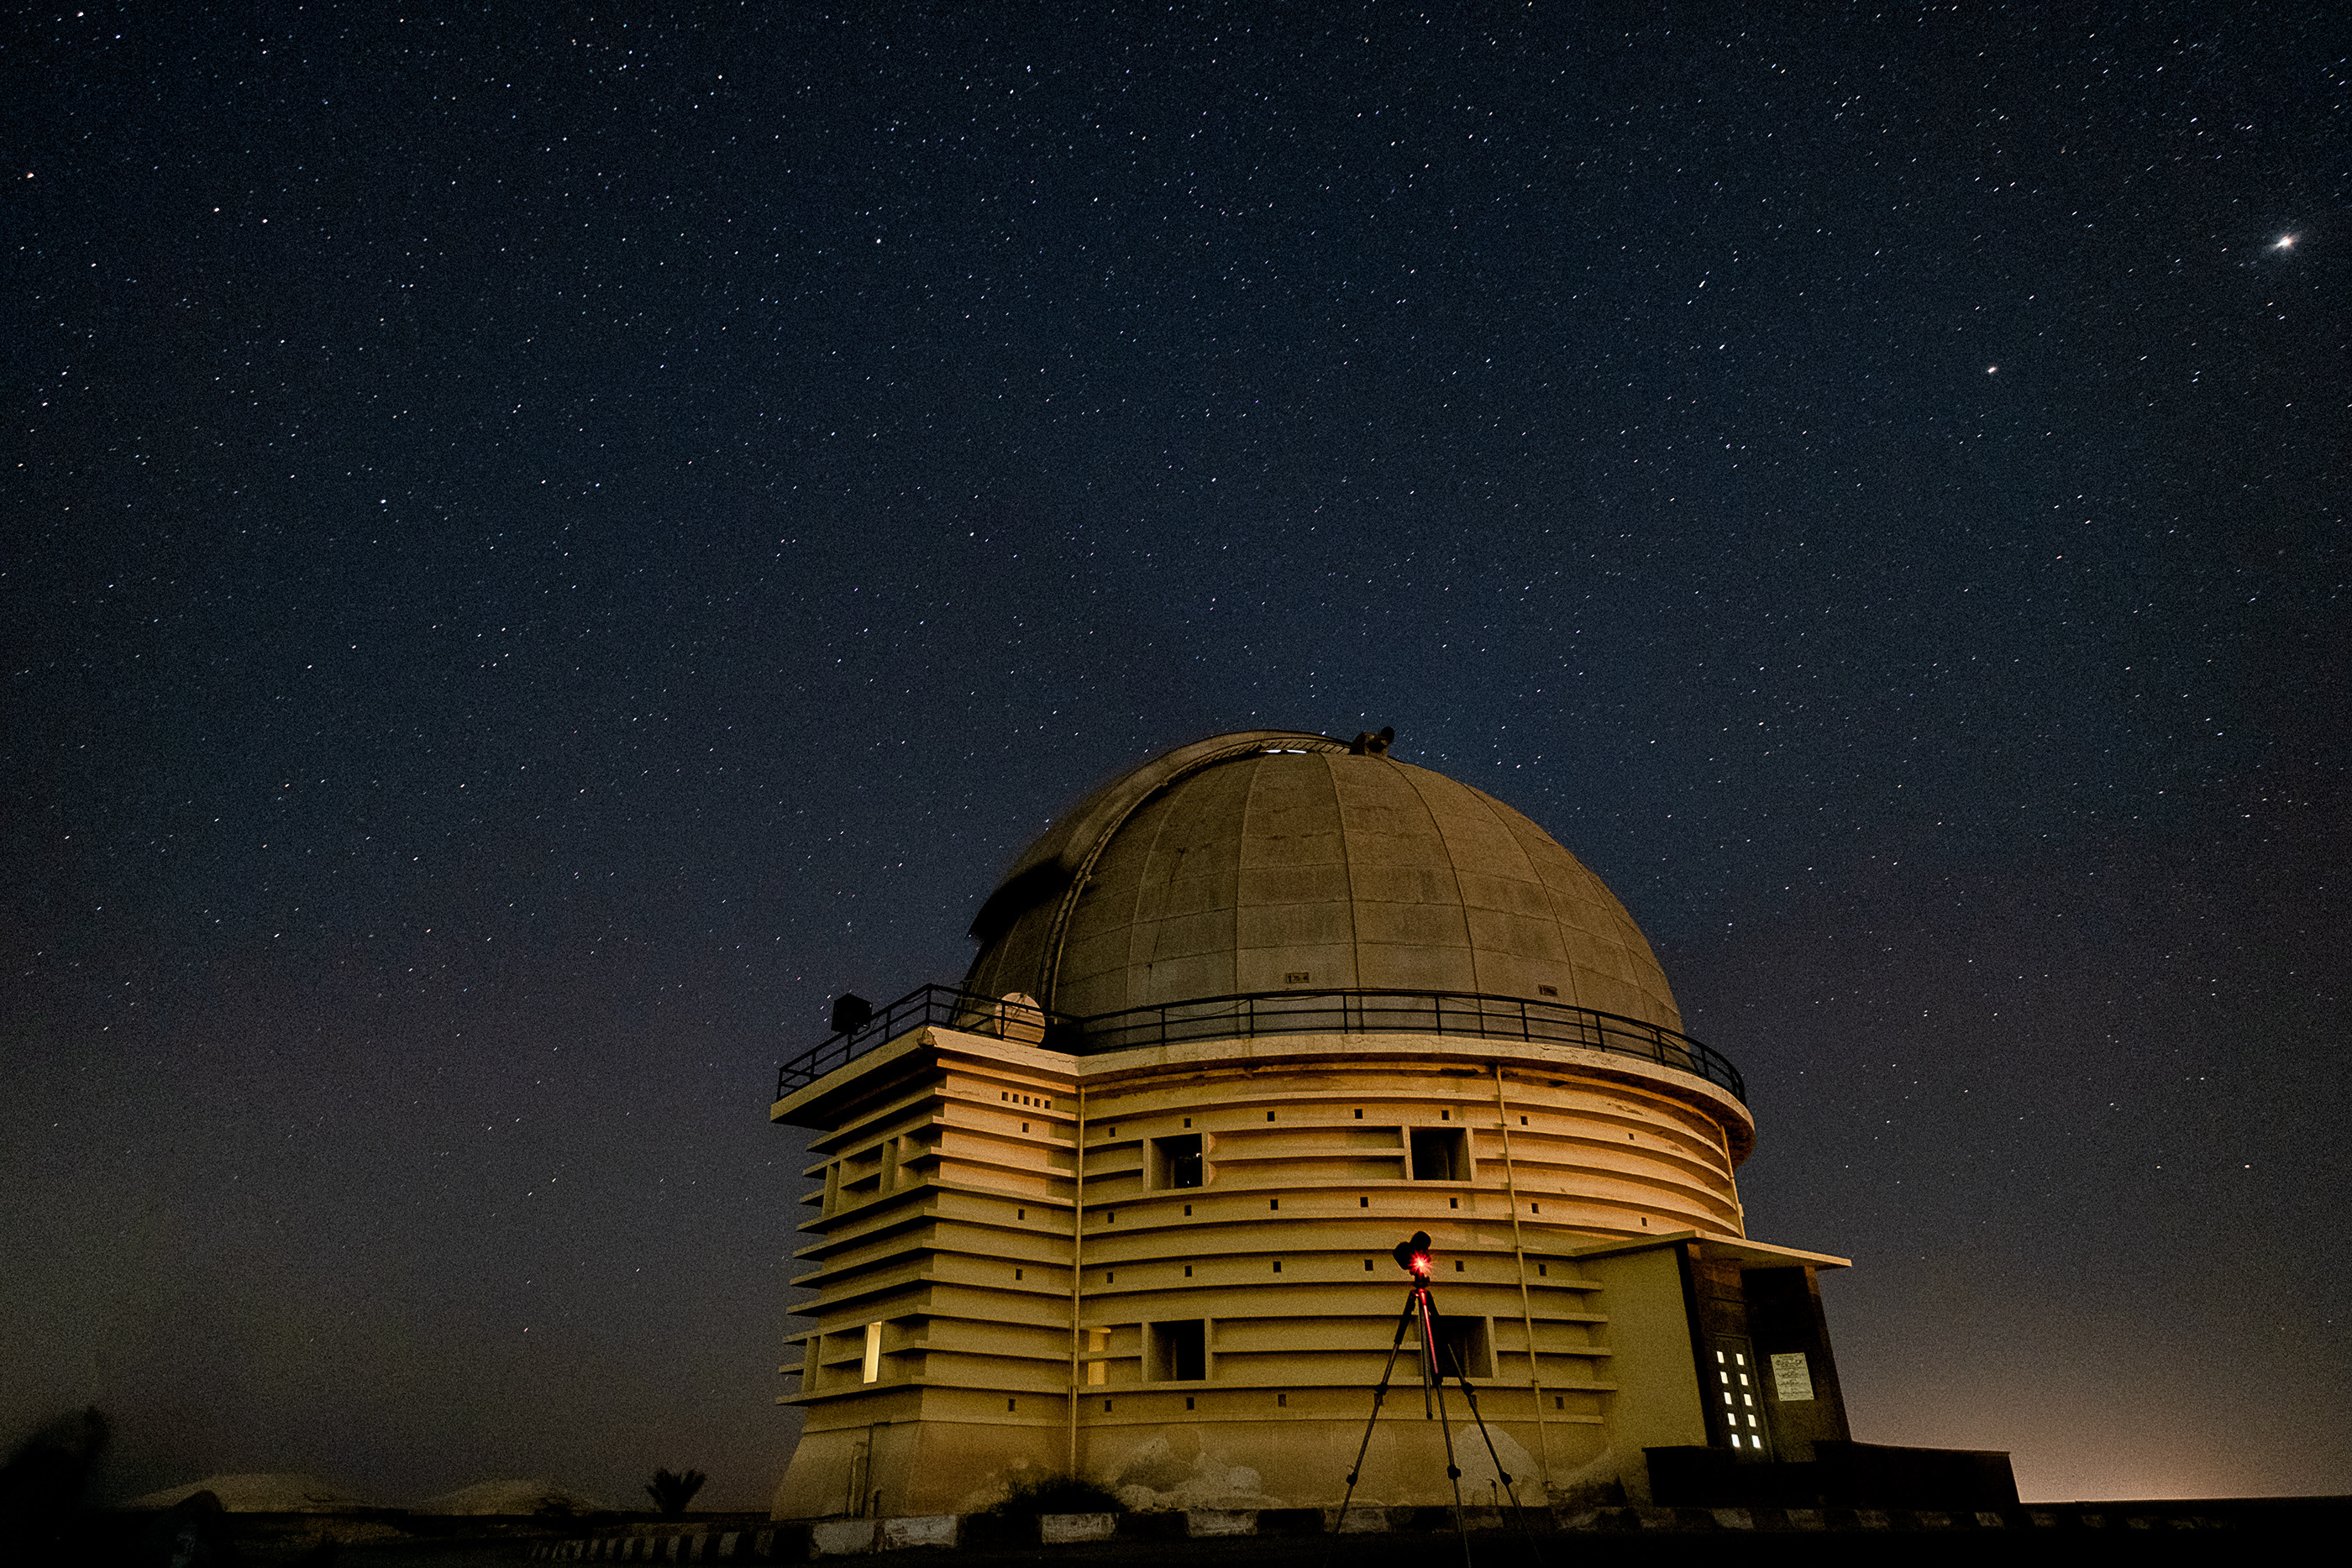 Kattamia Astronomical Observatory on Behance